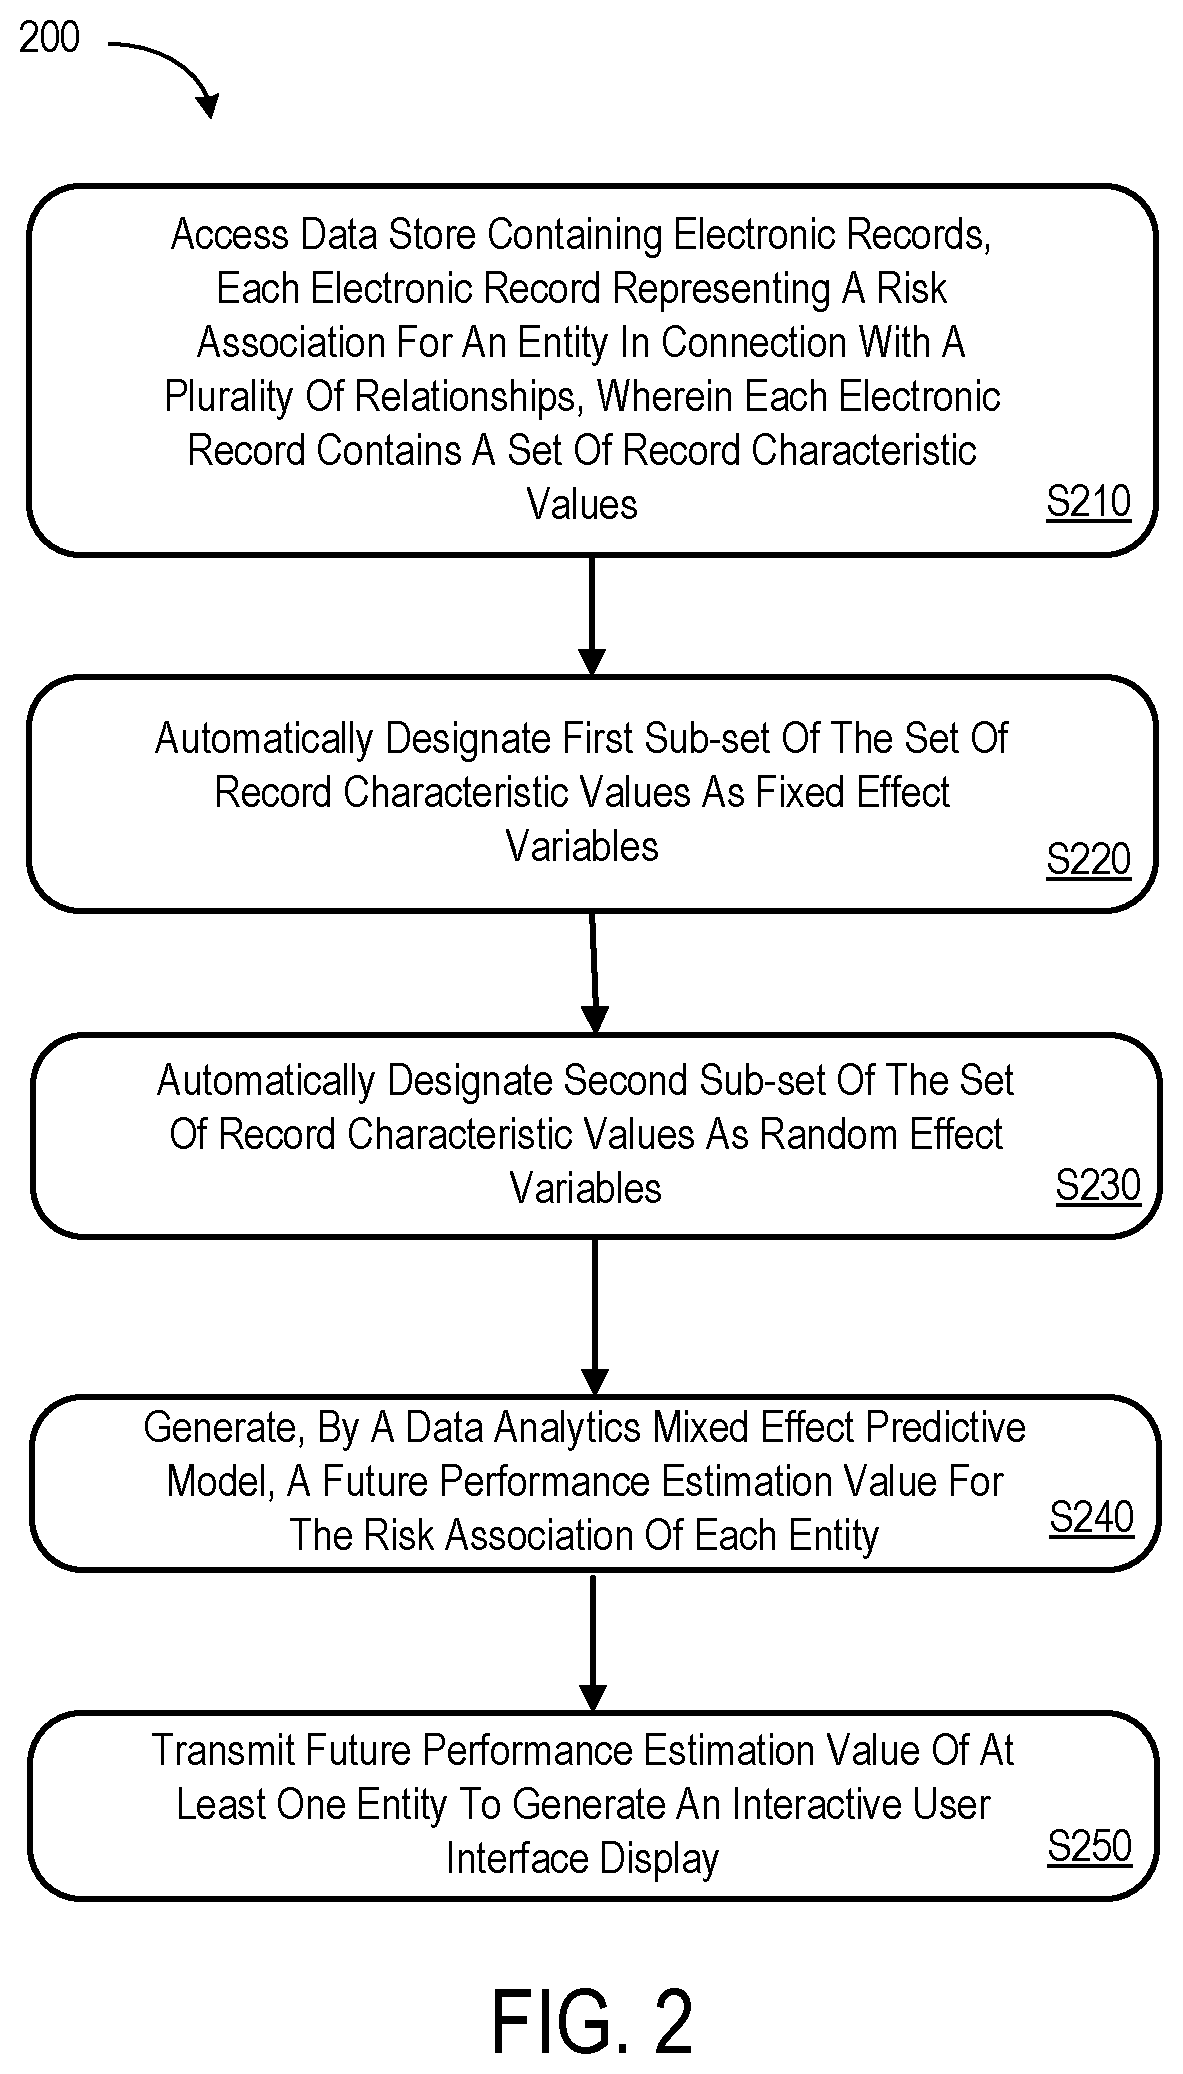 Performance estimation system utilizing a data analytics predictive model